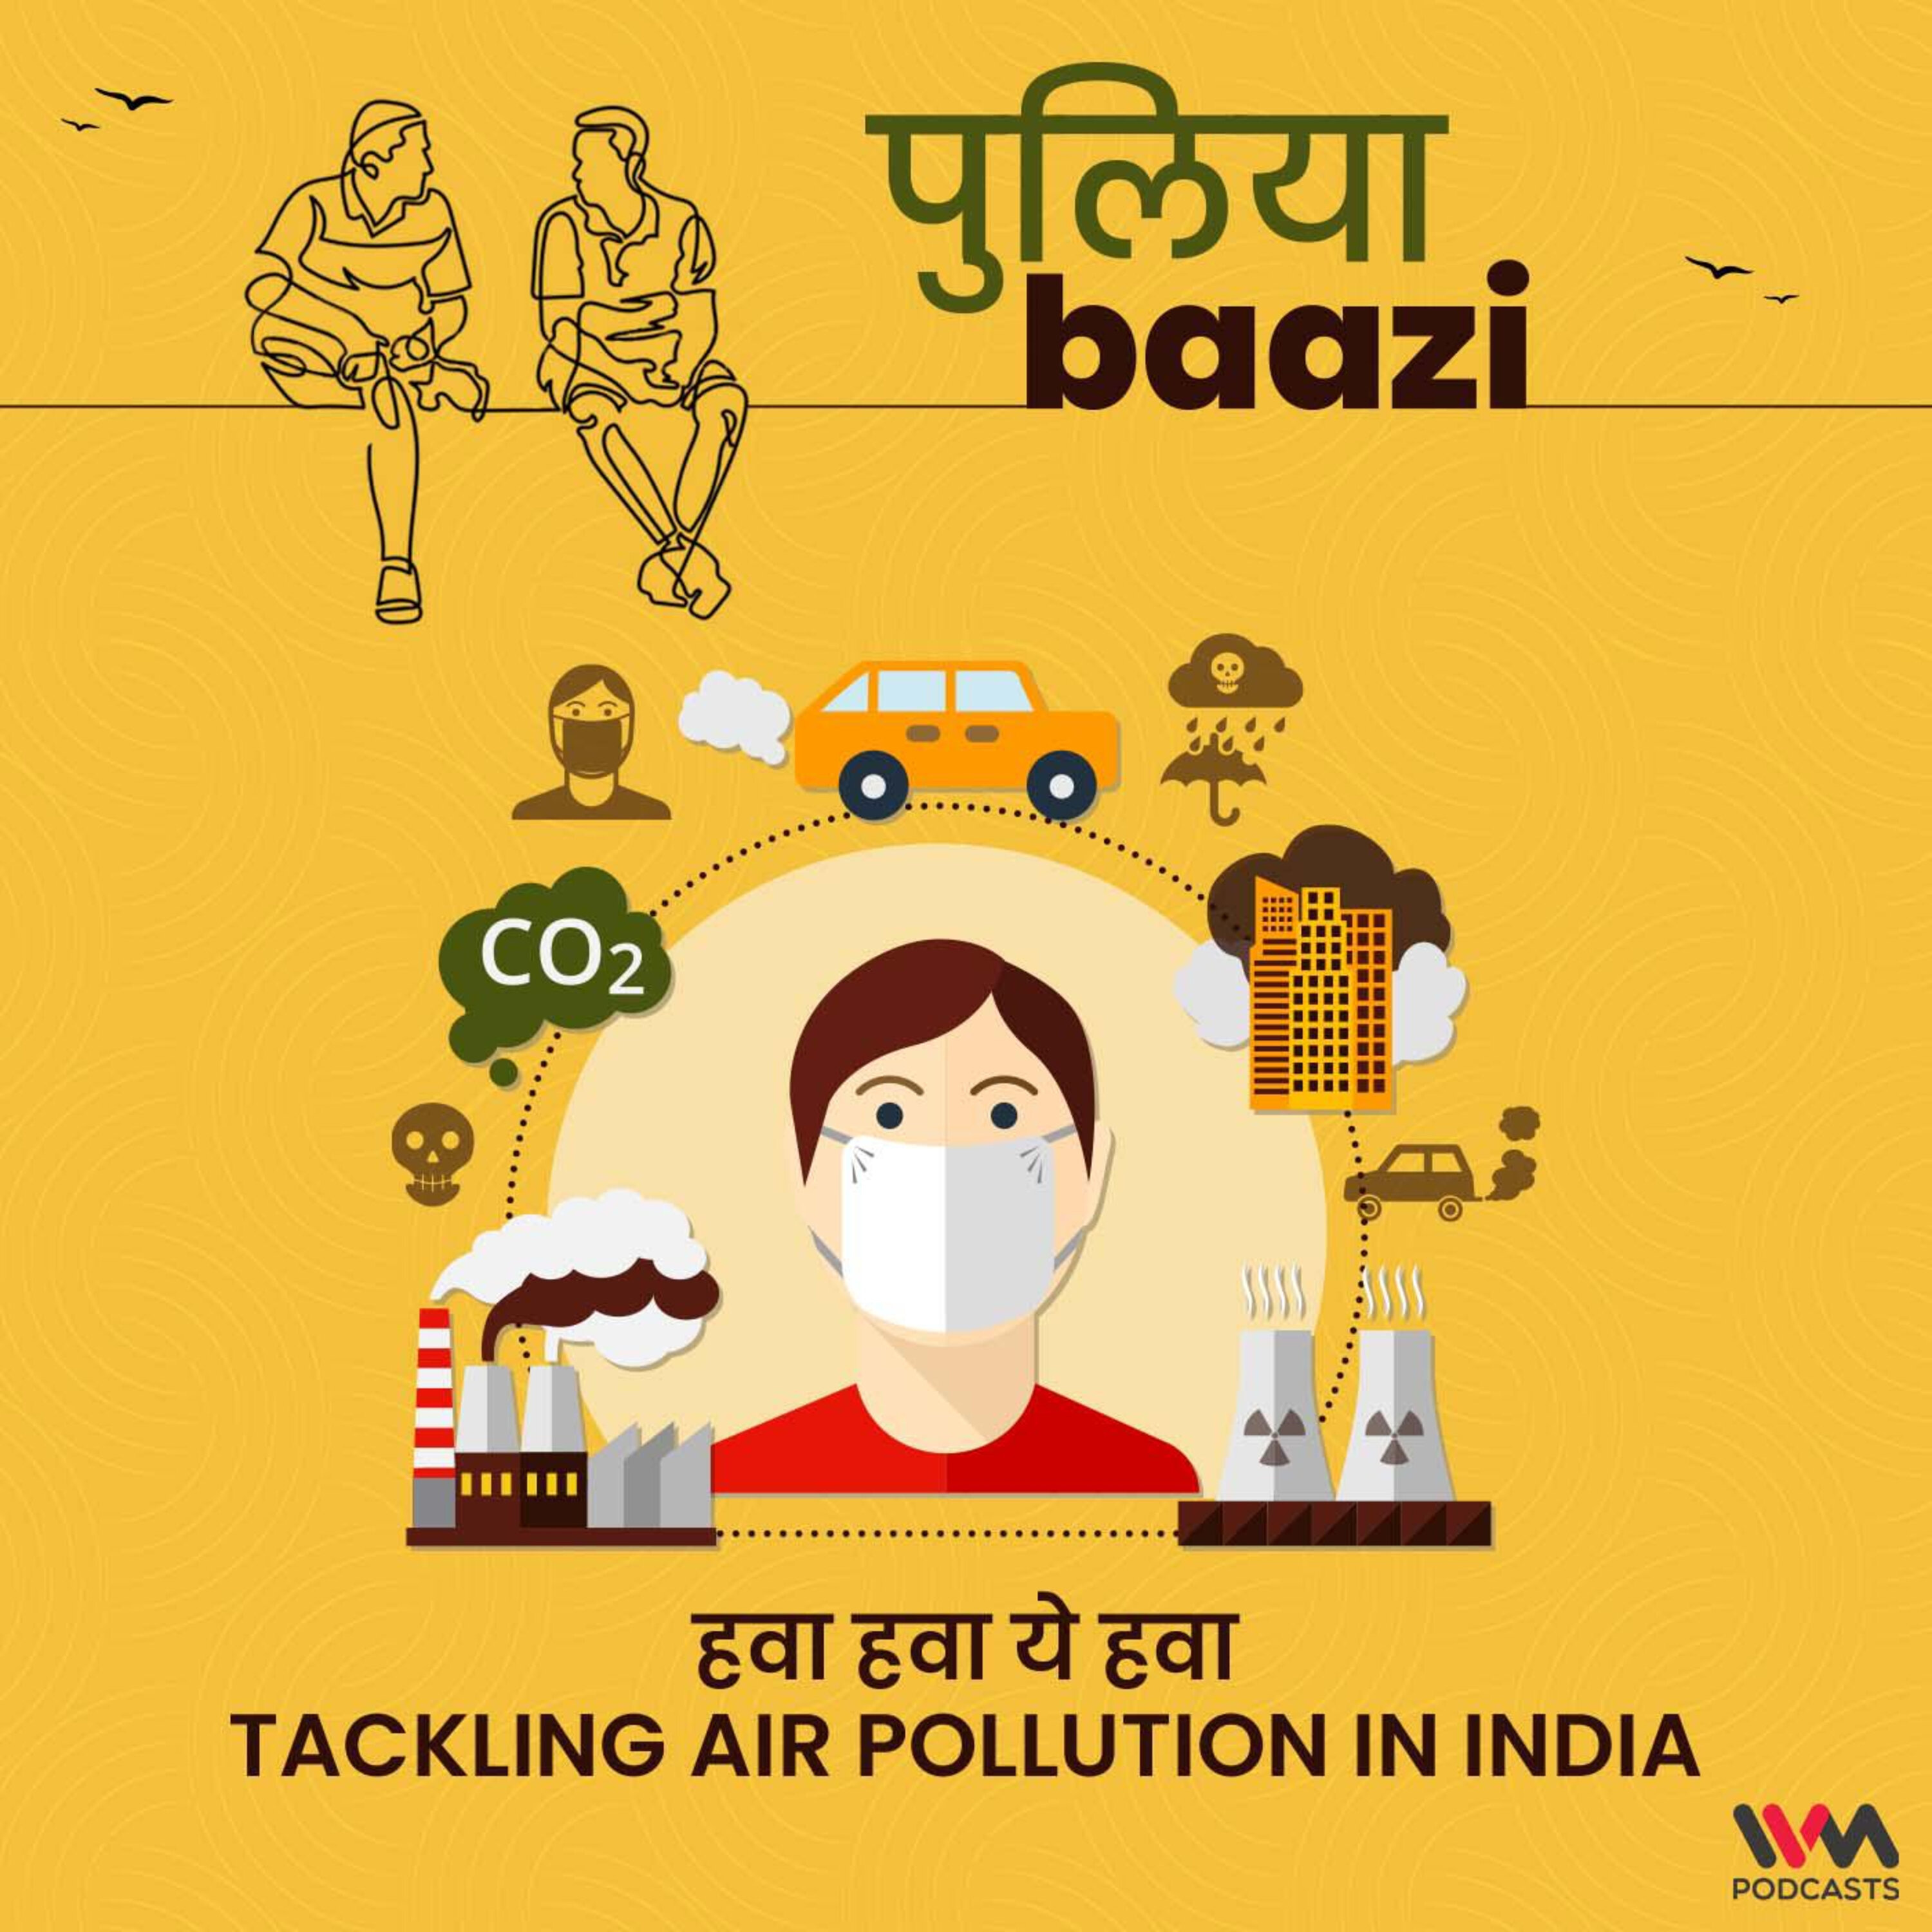 हवा हवा ये हवा. Tackling Air Pollution in India.